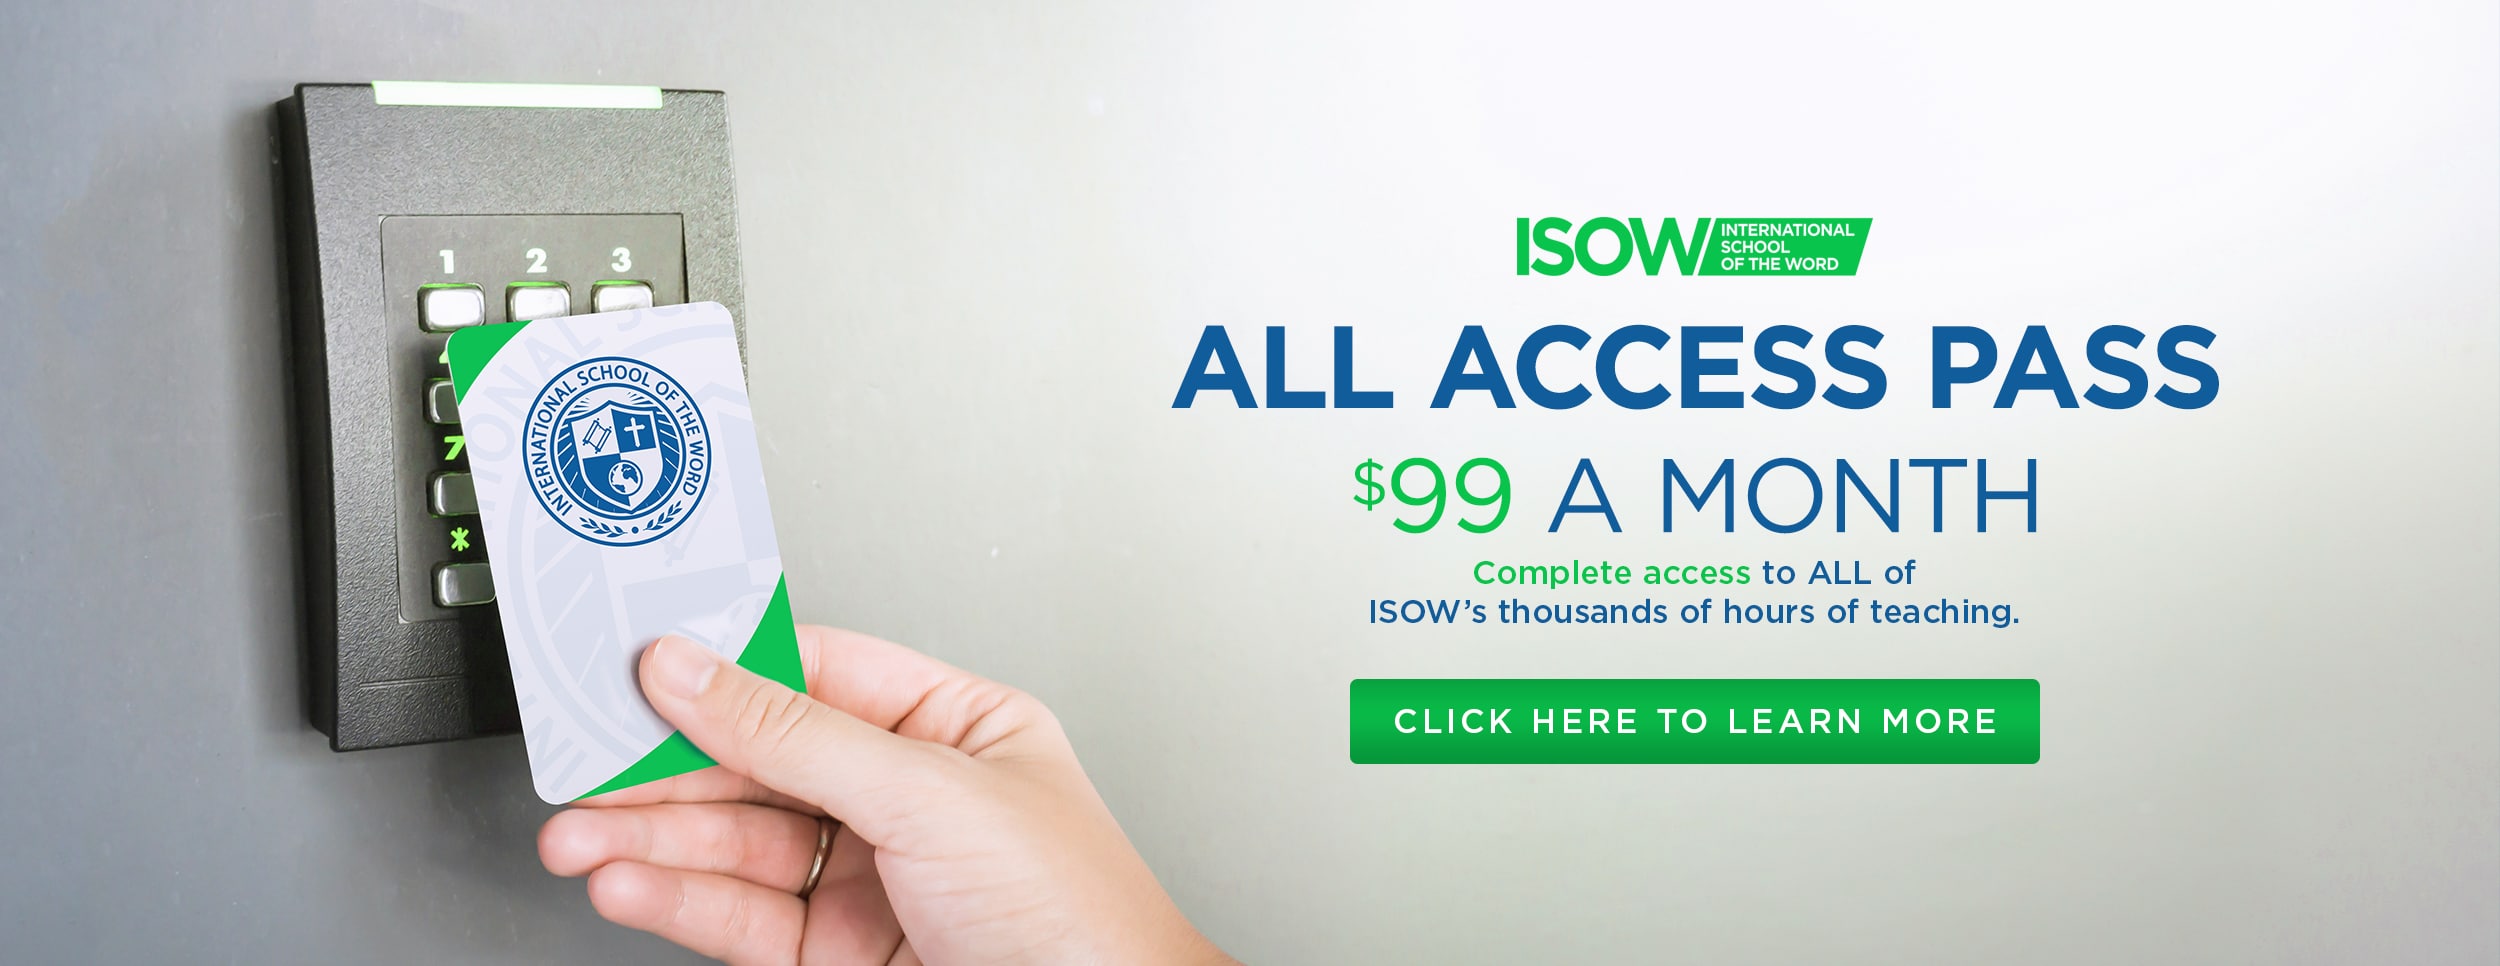 ISOW All Access Pass – Website Banner 1